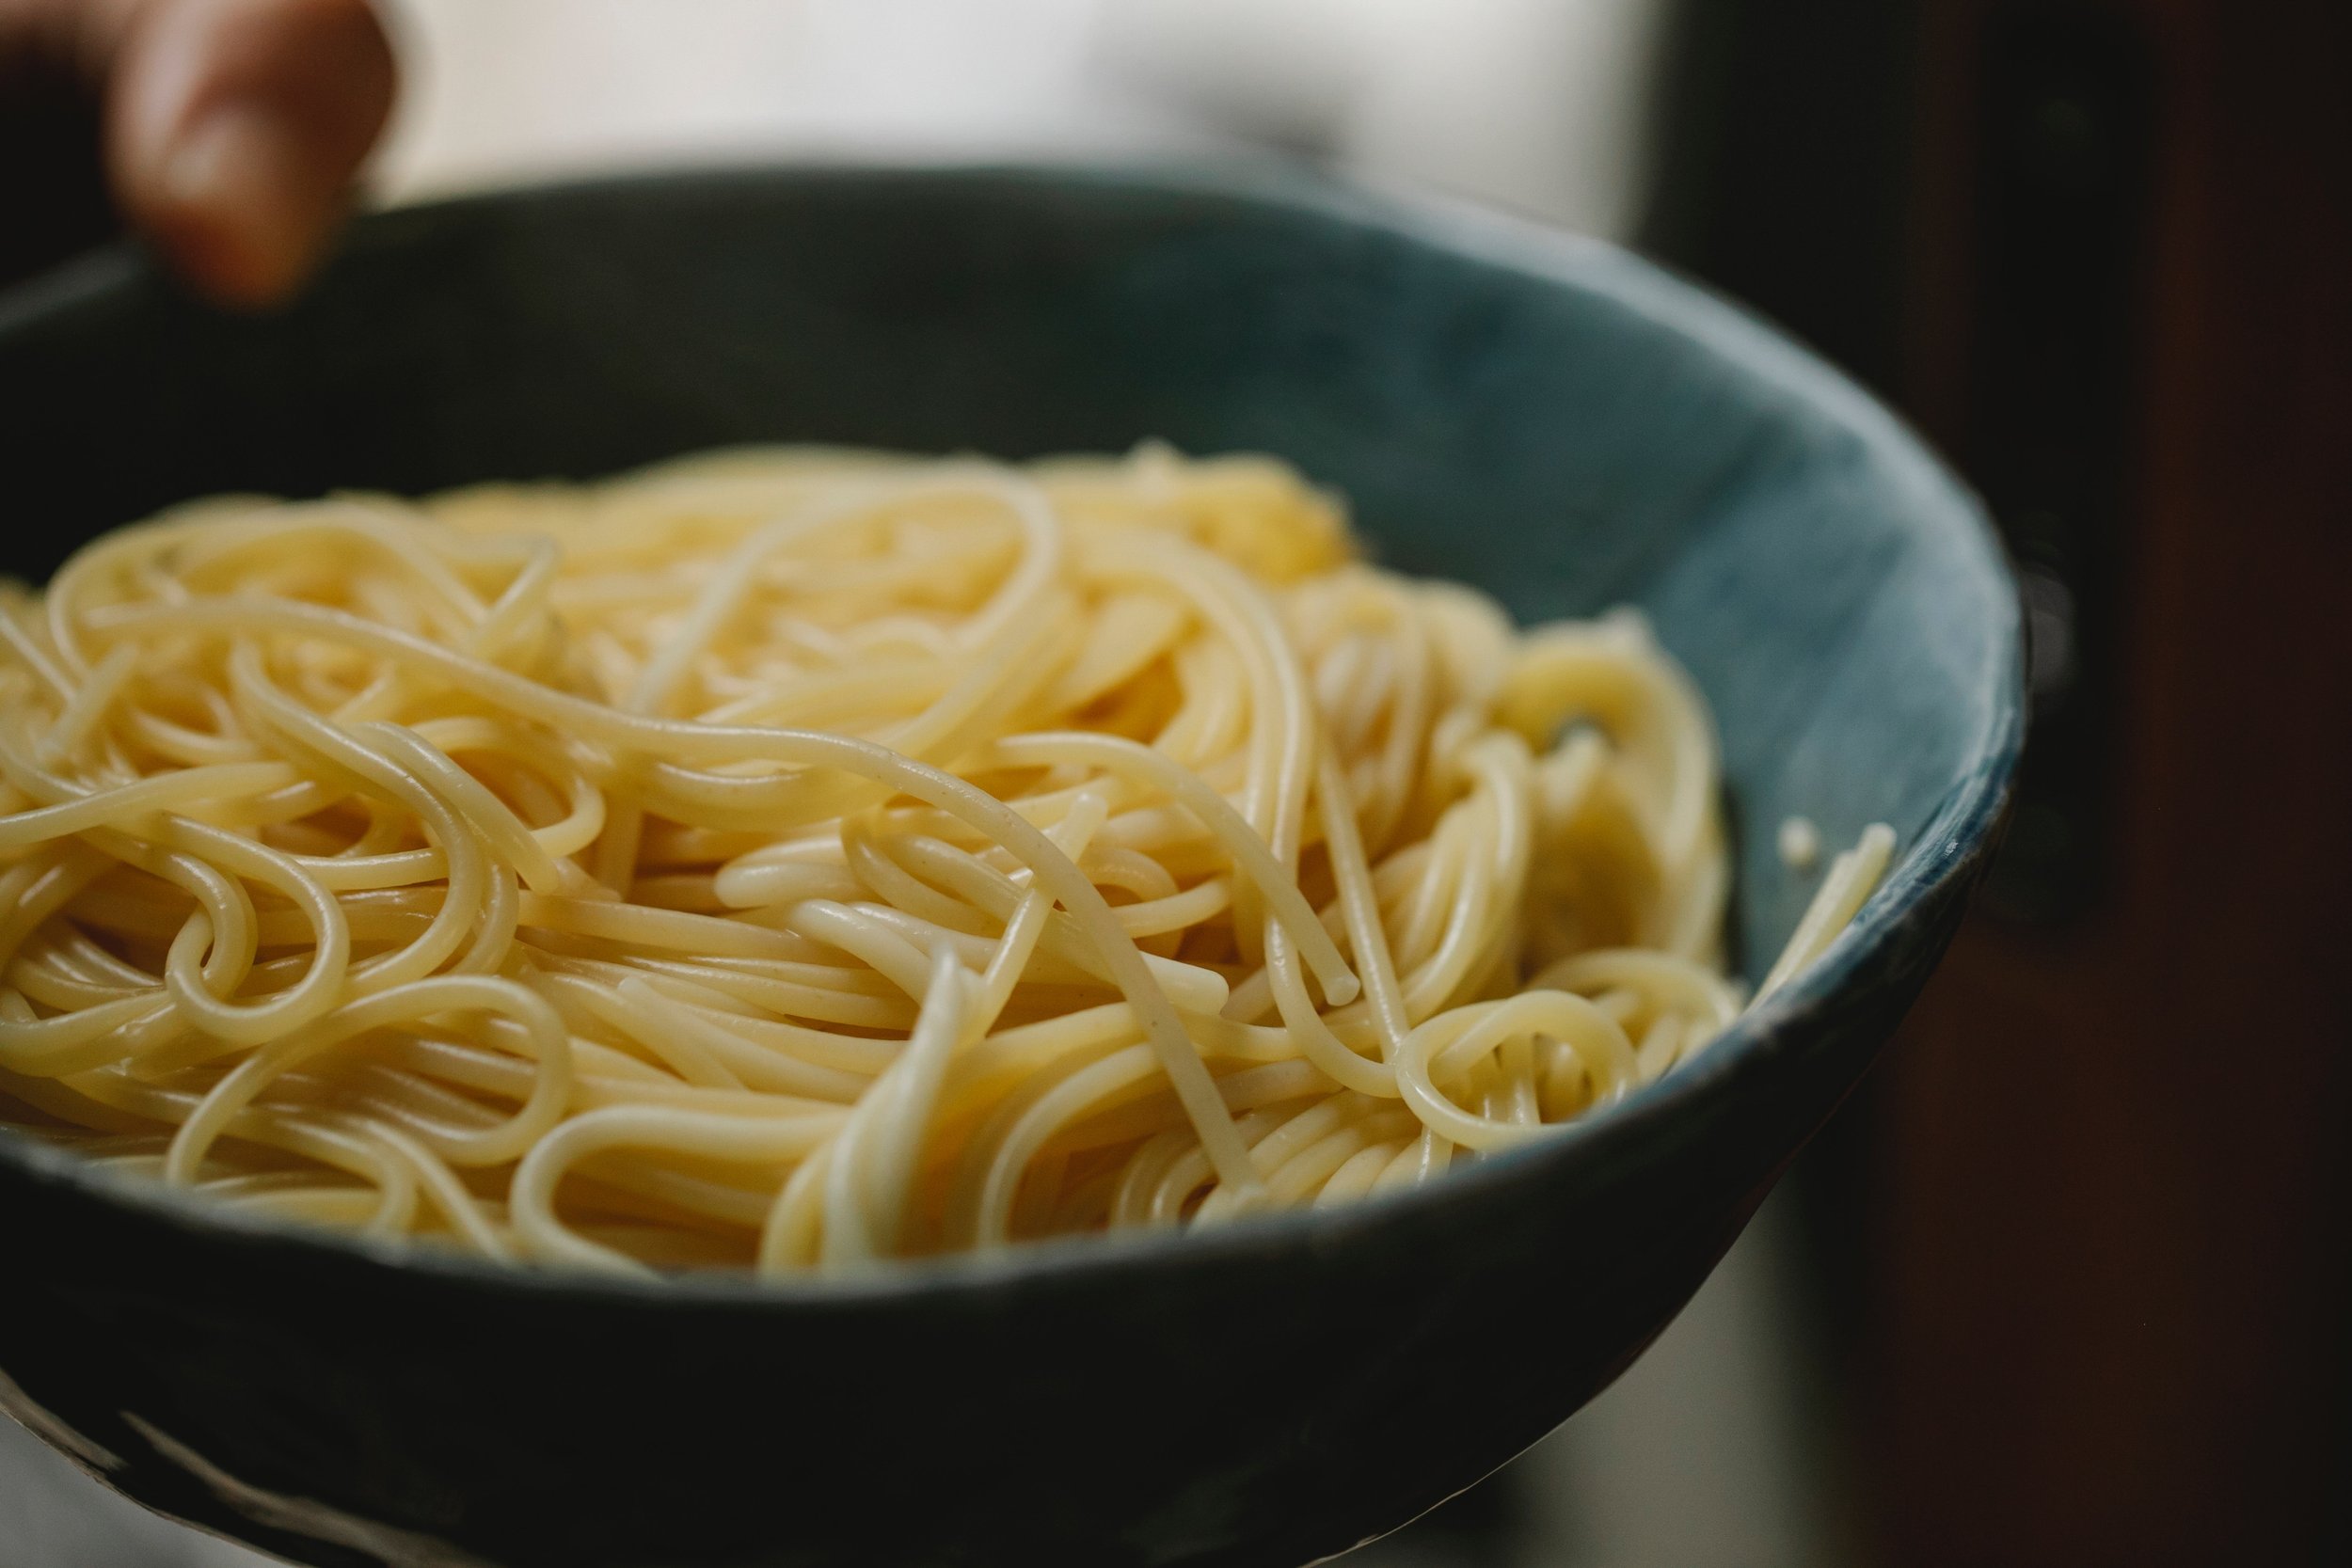 Spaghetti in a blue bowl